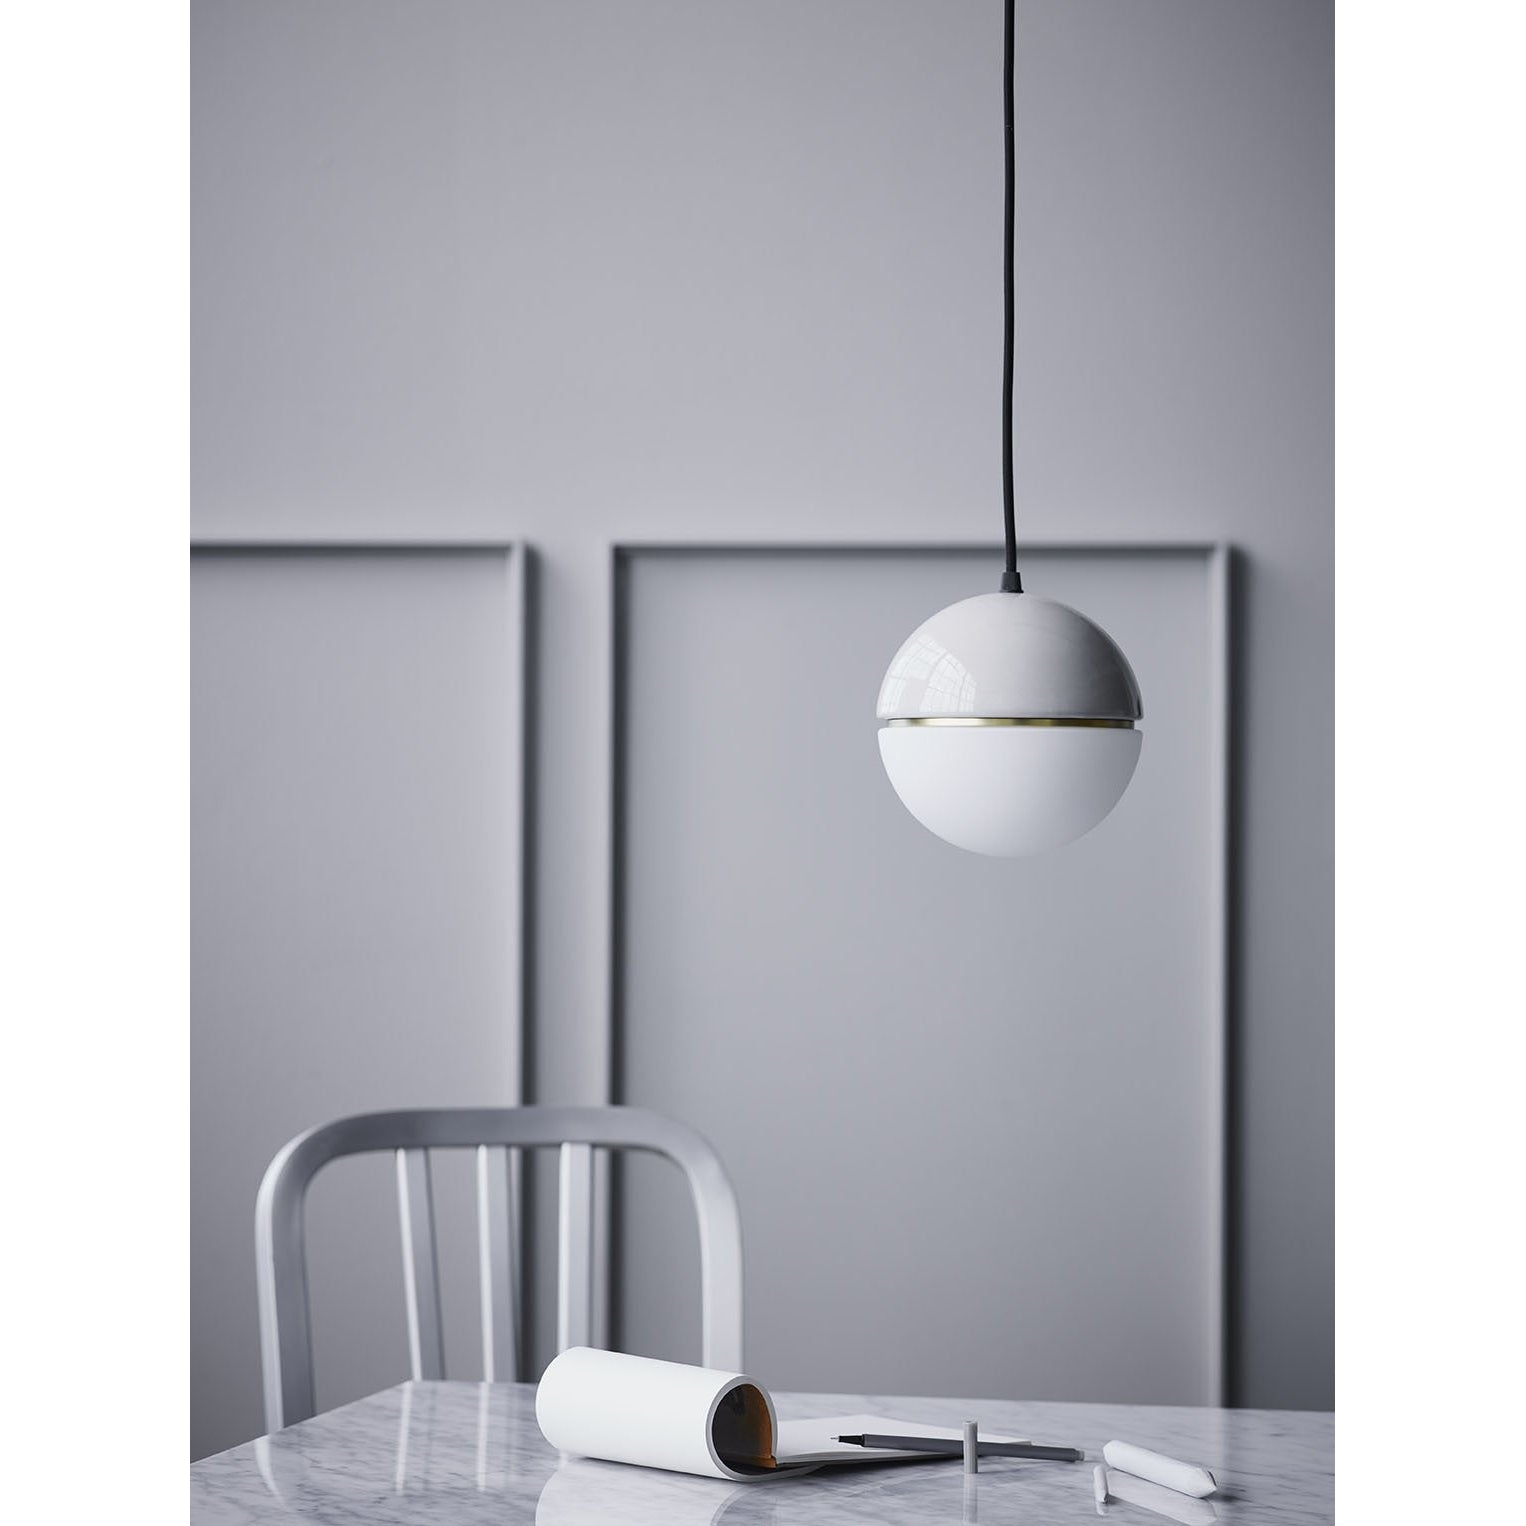 Lucie Kaas Macaroon hanger lampen lichtgrijs, Ø 16 cm